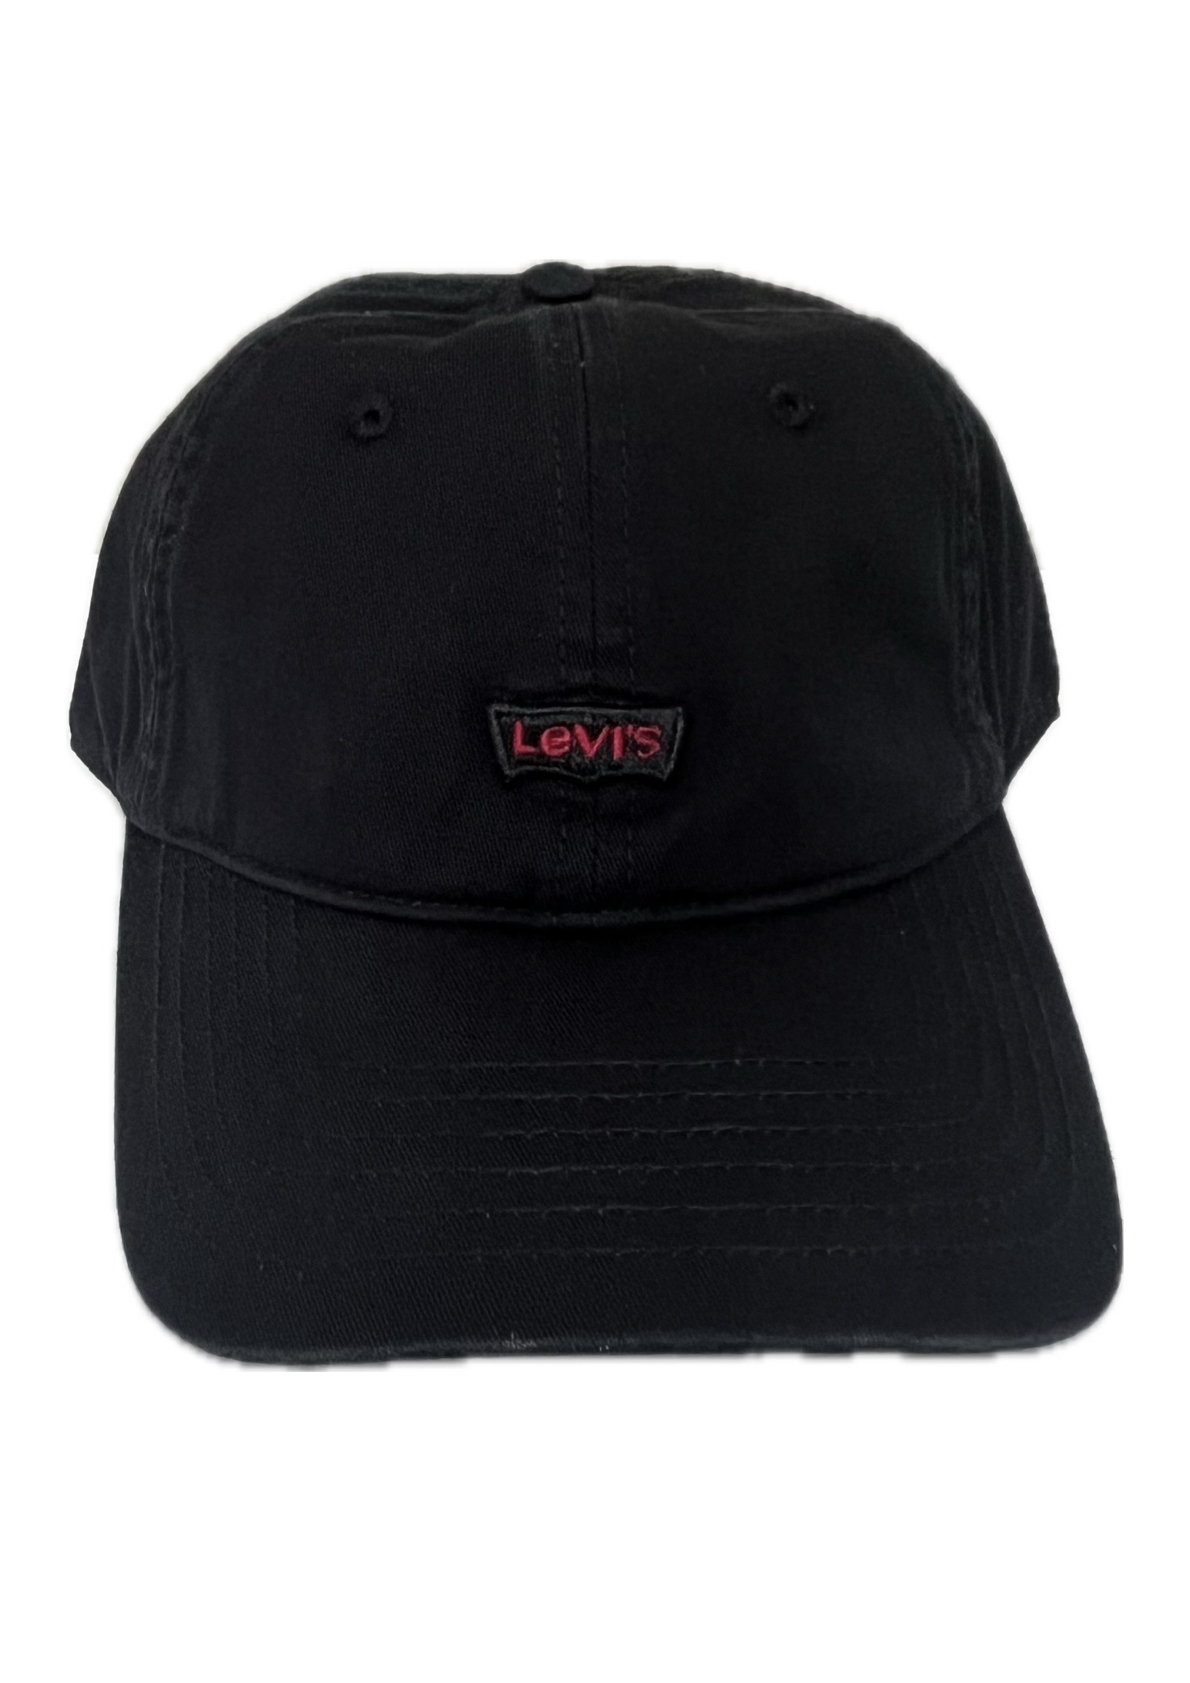 Бейсболка унисекс LEVIS PERFORMANCE black with an embroidered logo, one size